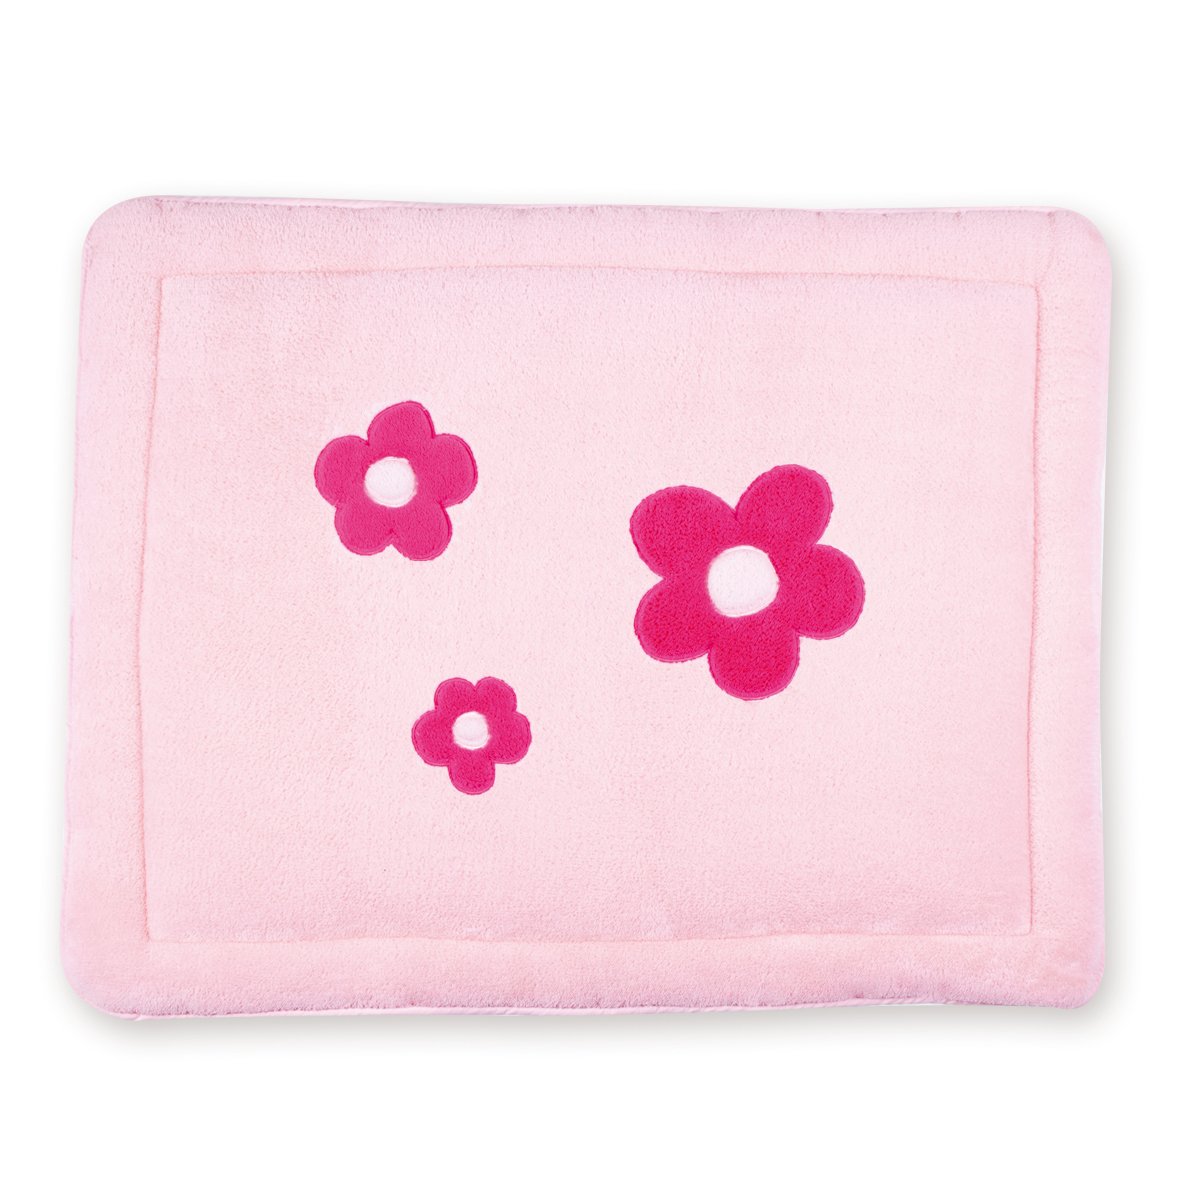 Baby Boum Softy 219LIZIE47SF Playpen Blanket/Play Mat Lizie Bemini by Darling 75 x 95 cm pink